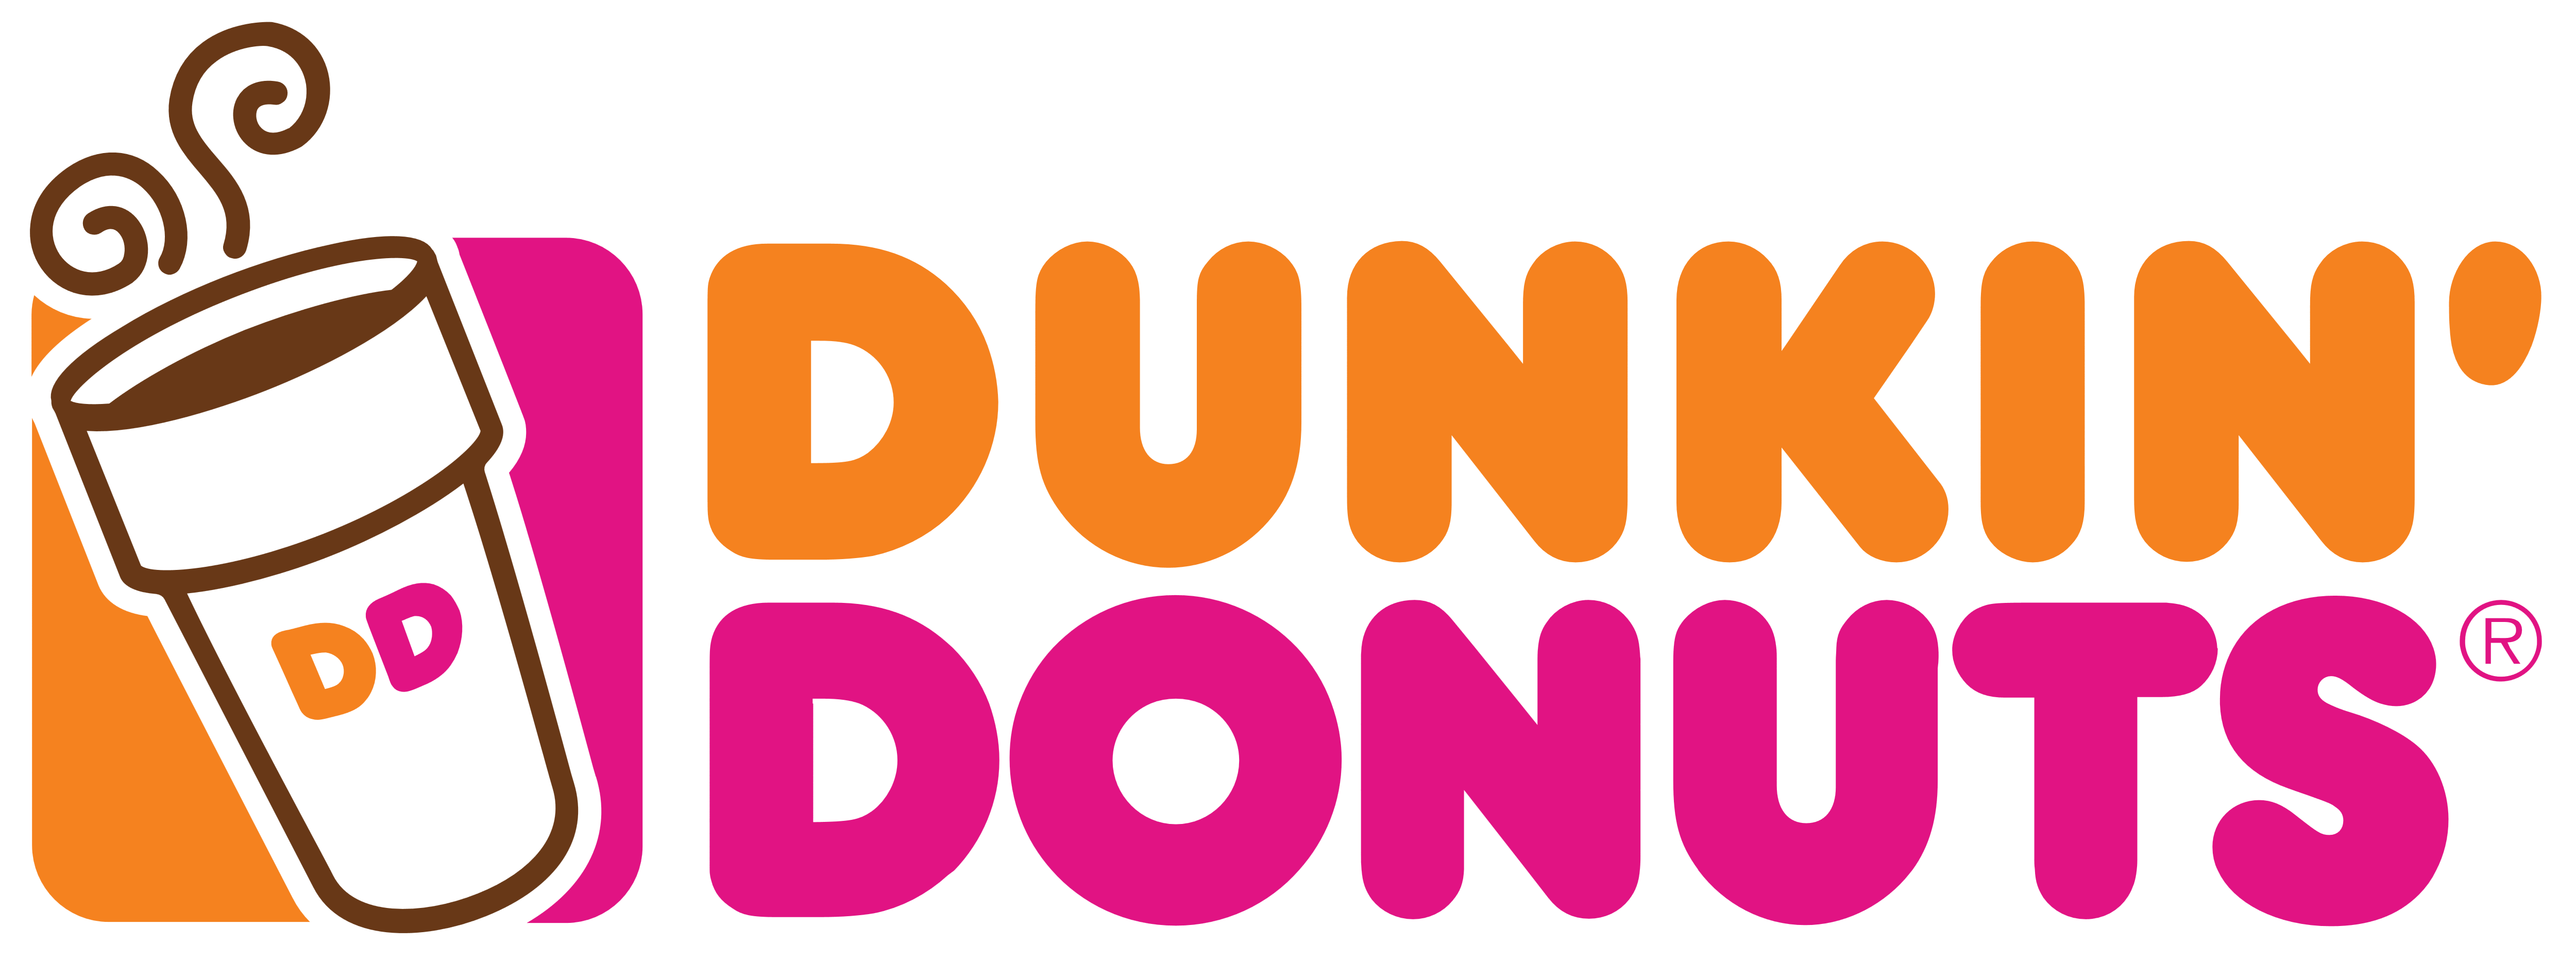 Dunkin’ Donuts Logos Download